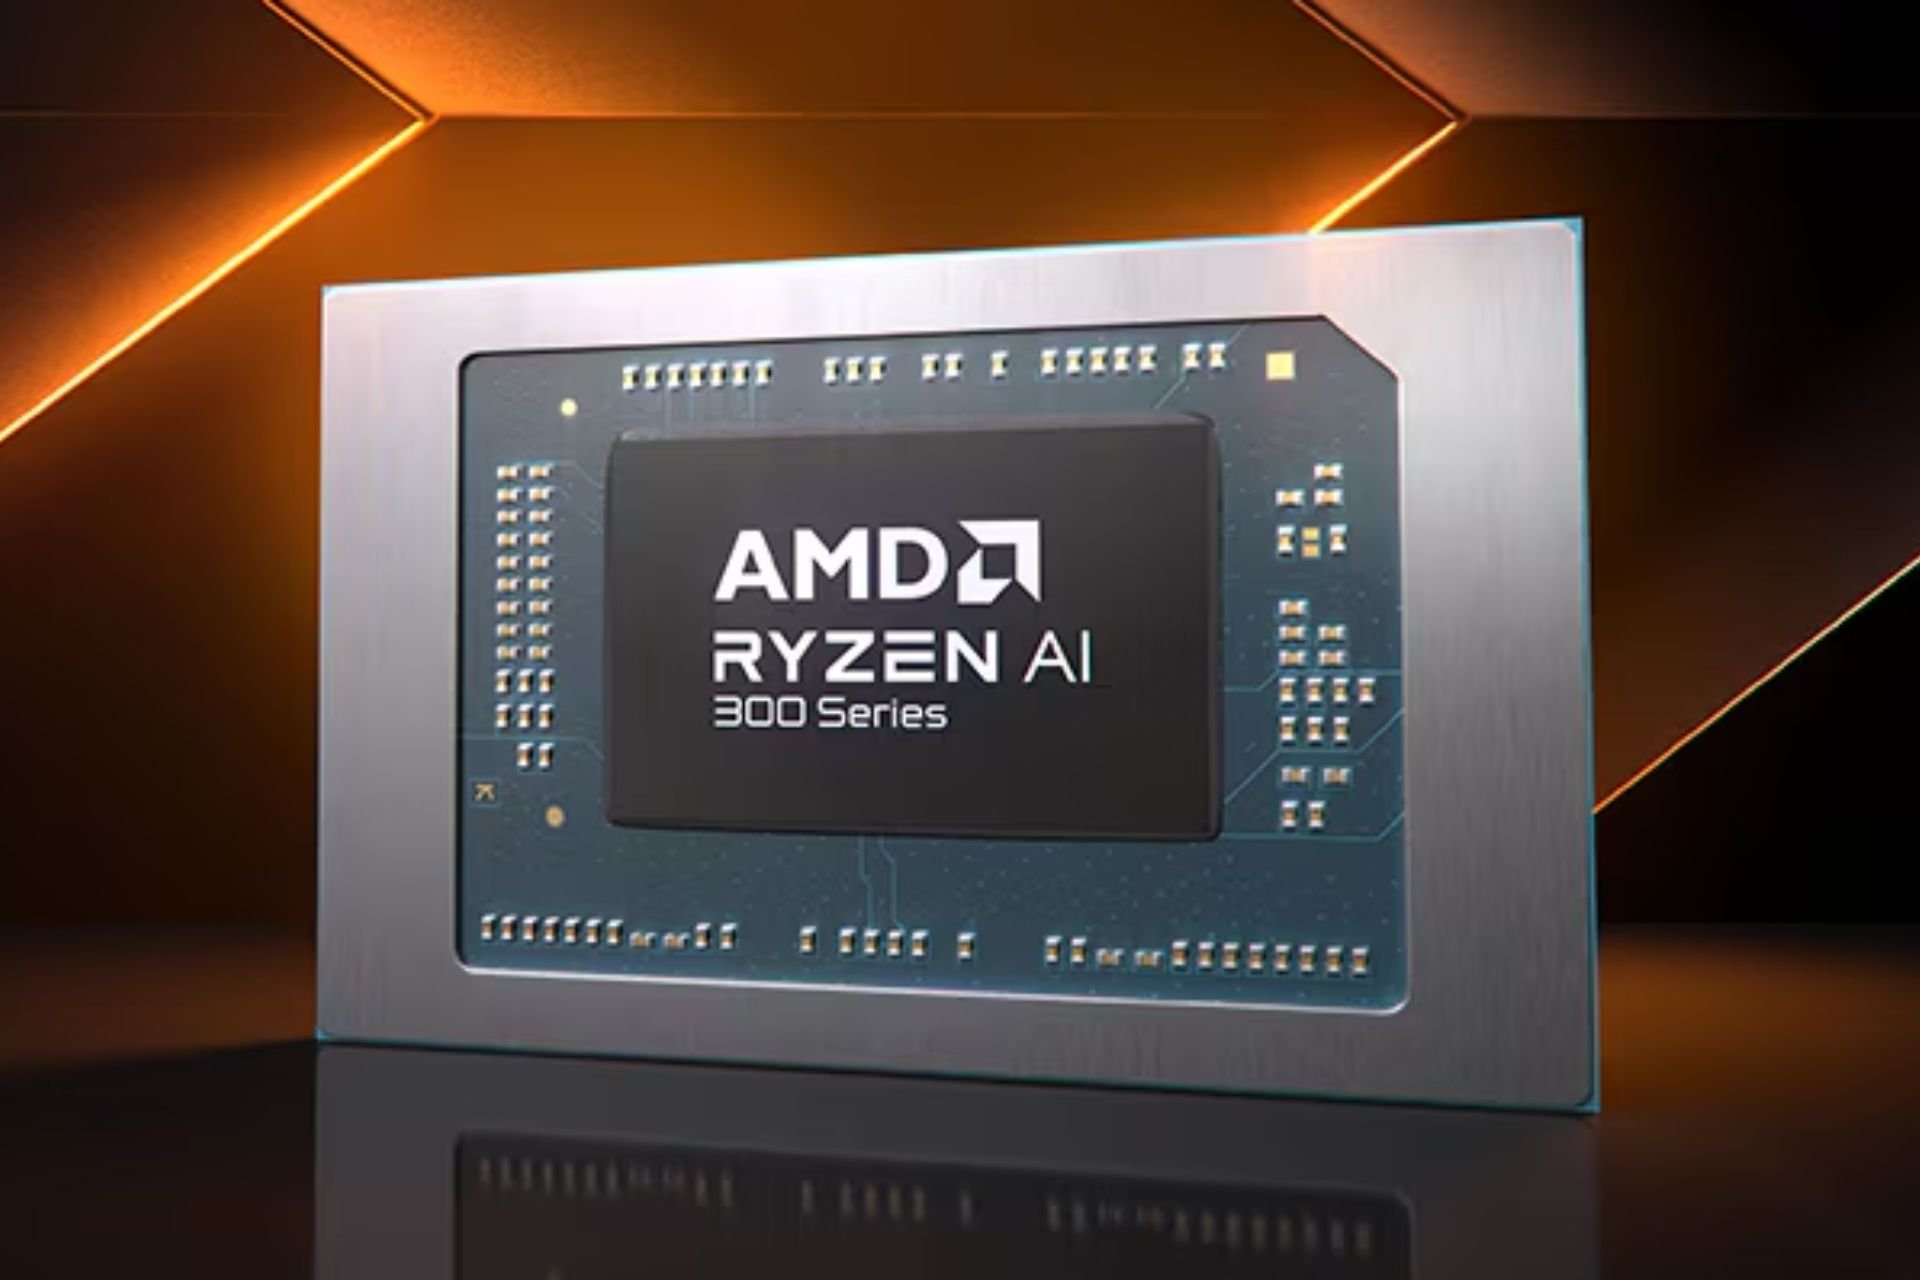 AMD Ryzen 300 series